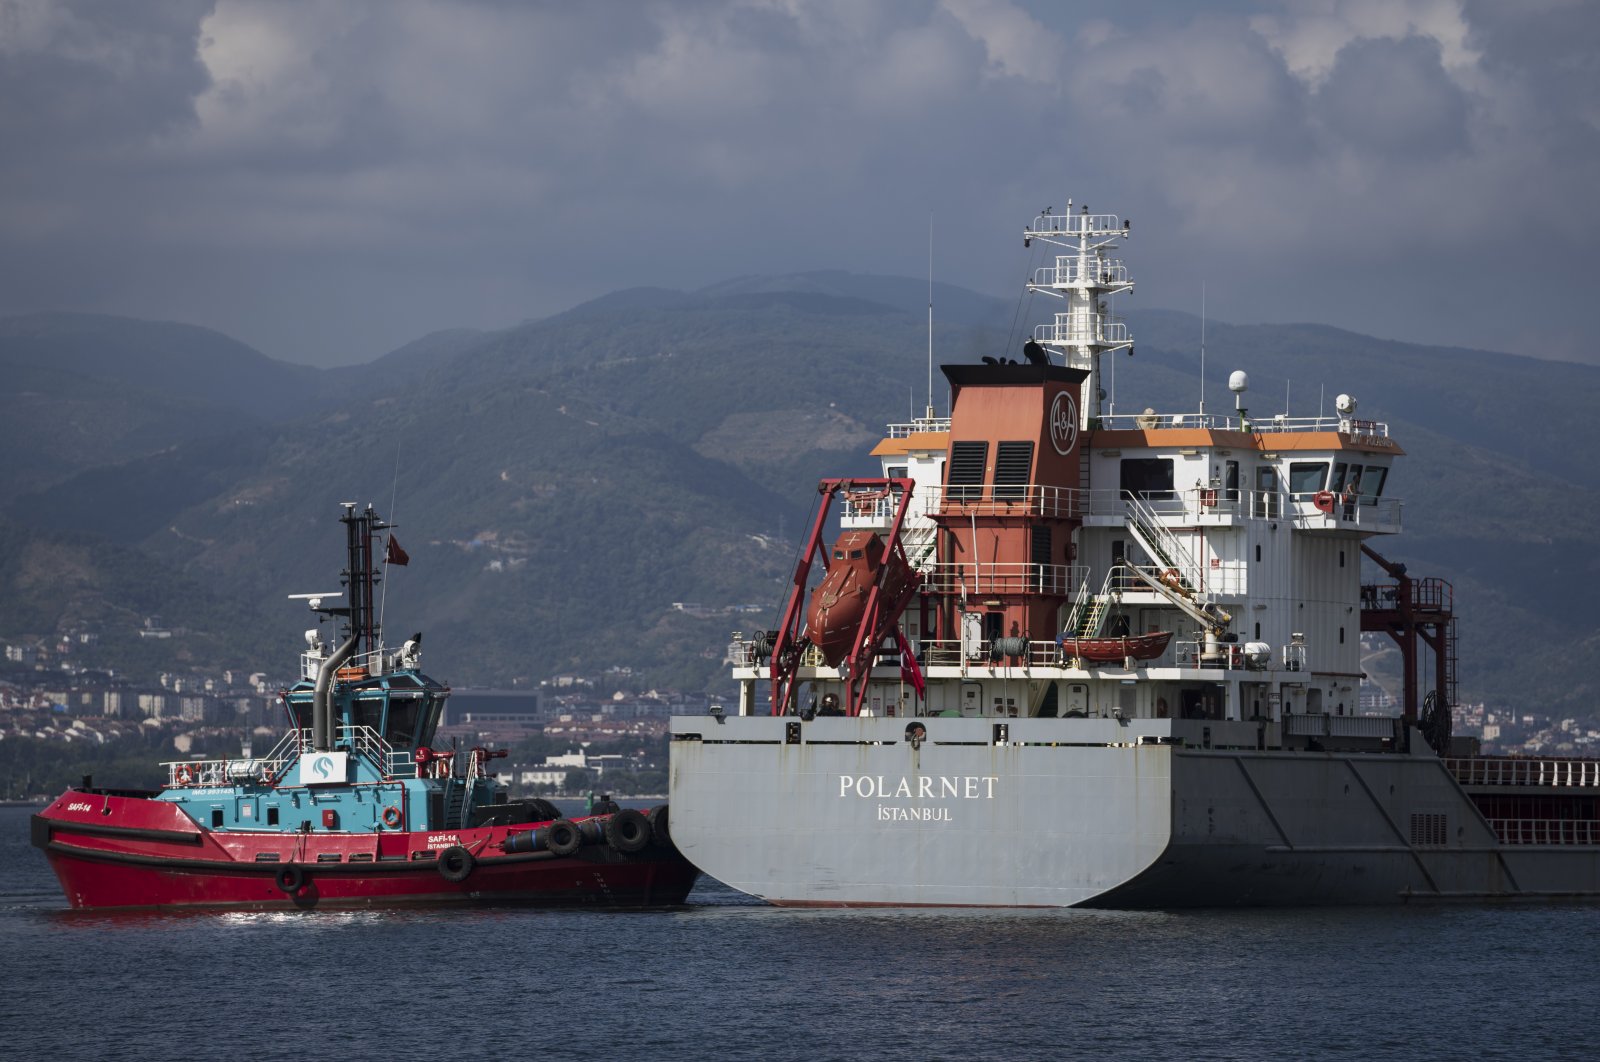 The cargo ship Polarnet arrives at Derince port in the Gulf of Izmit, Turkey, Aug. 8, 2022. (AP Photo/Khalil Hamra)